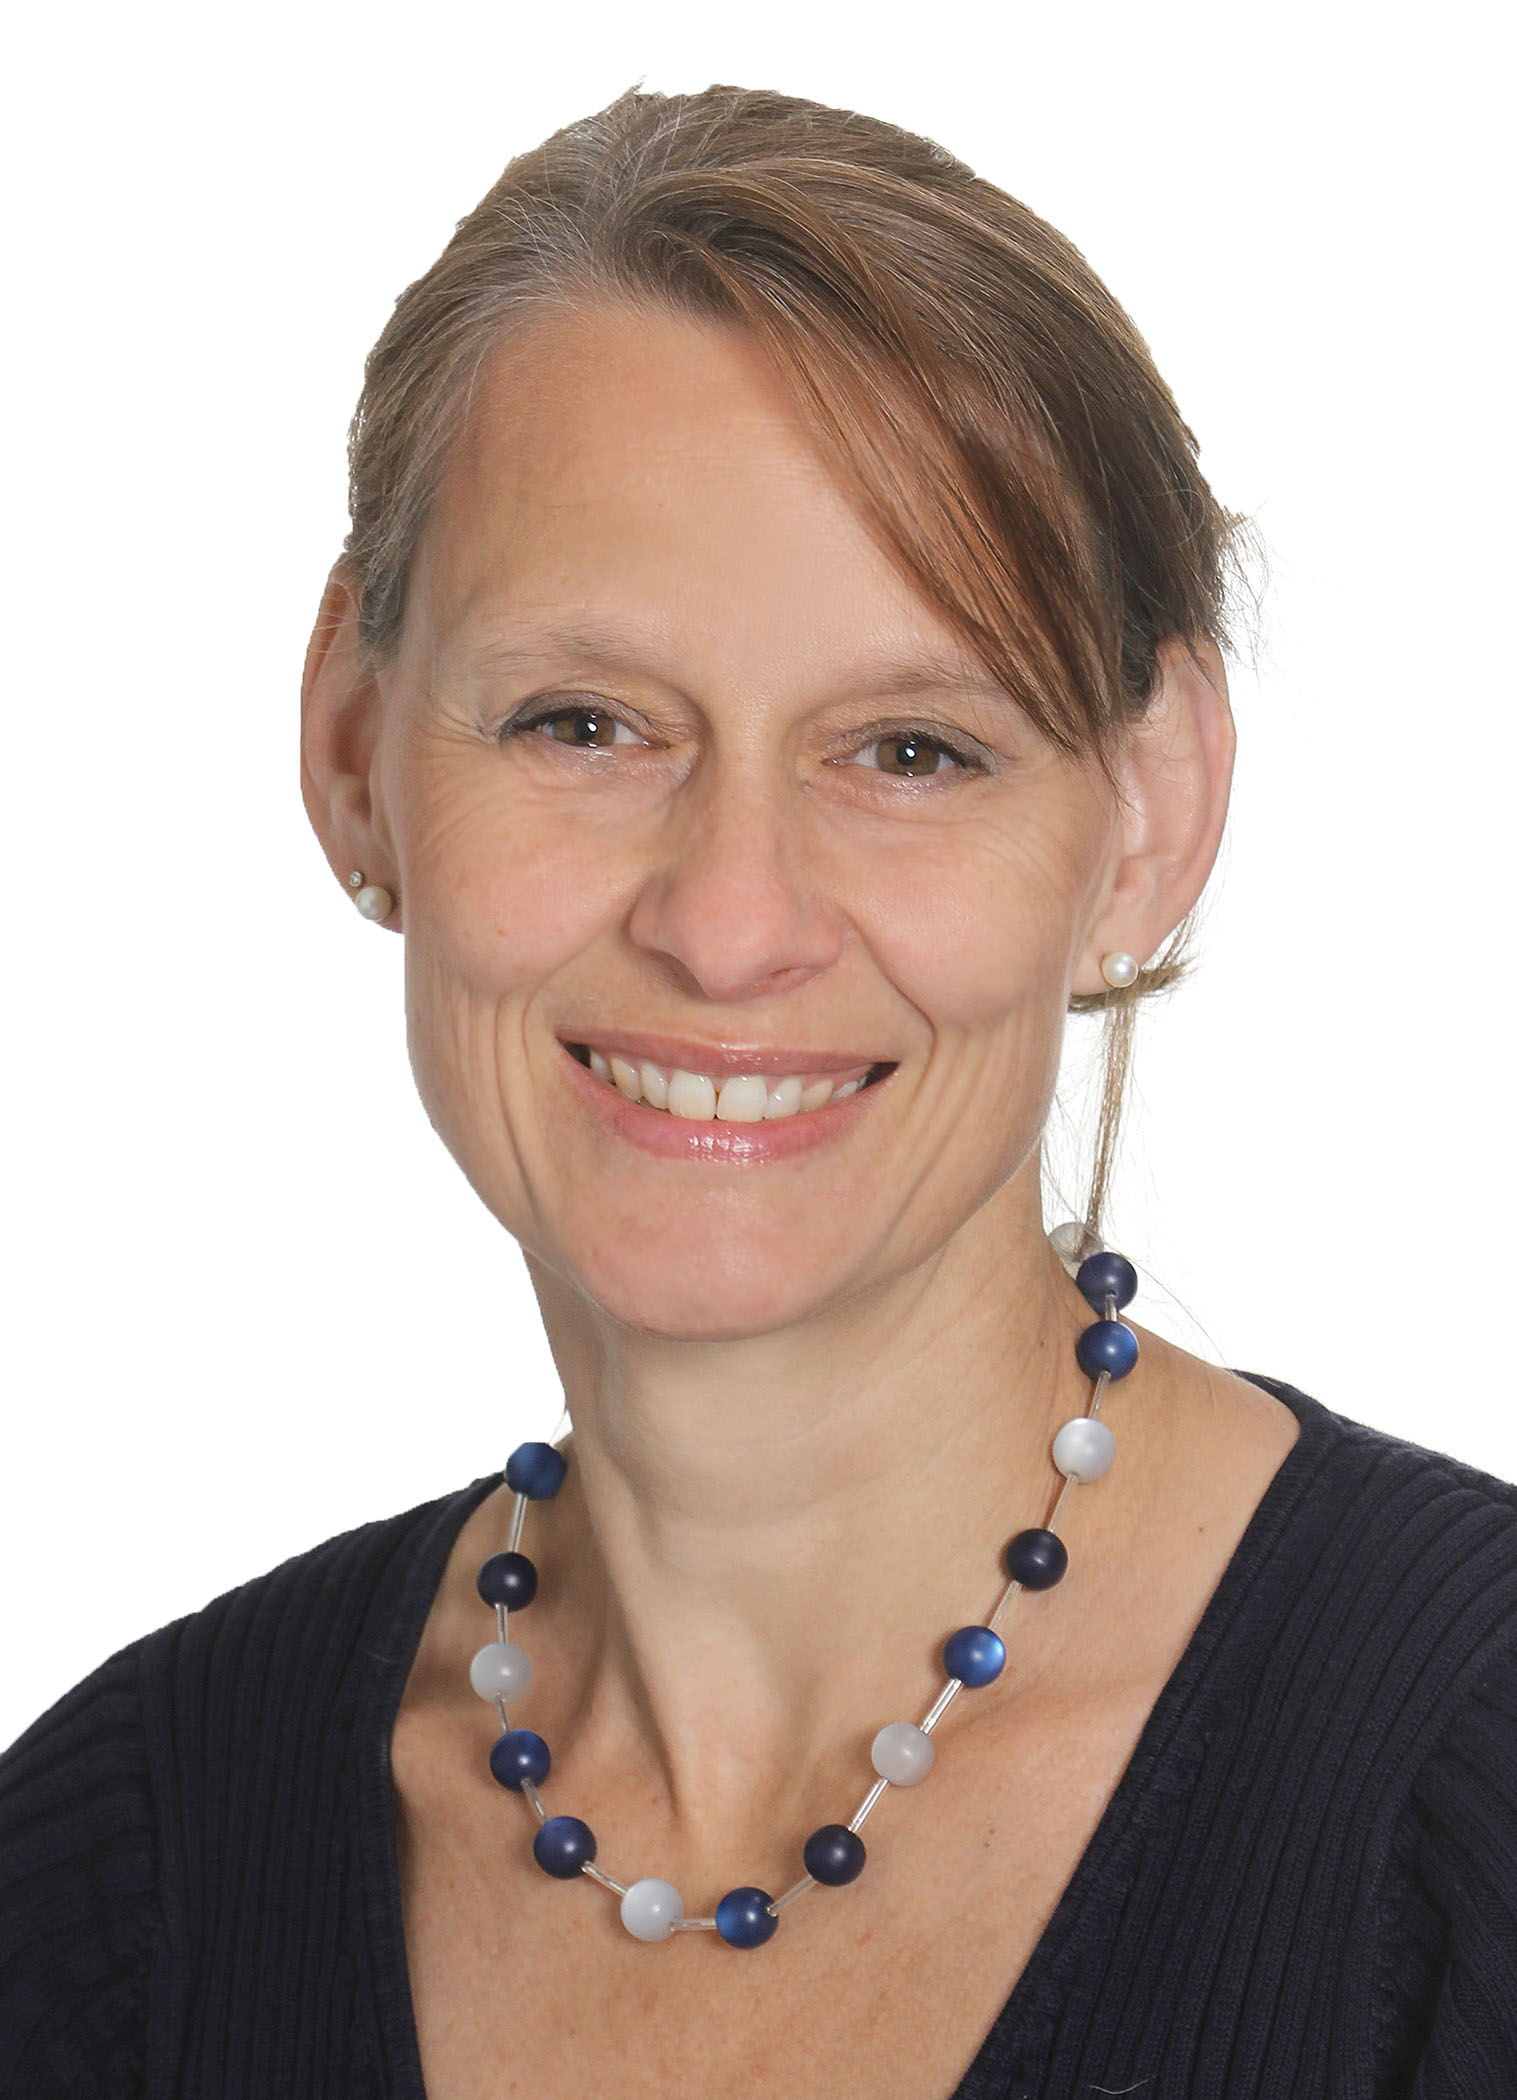 Univ.-Prof. Dr. Barbara Hoffmann, MPH 